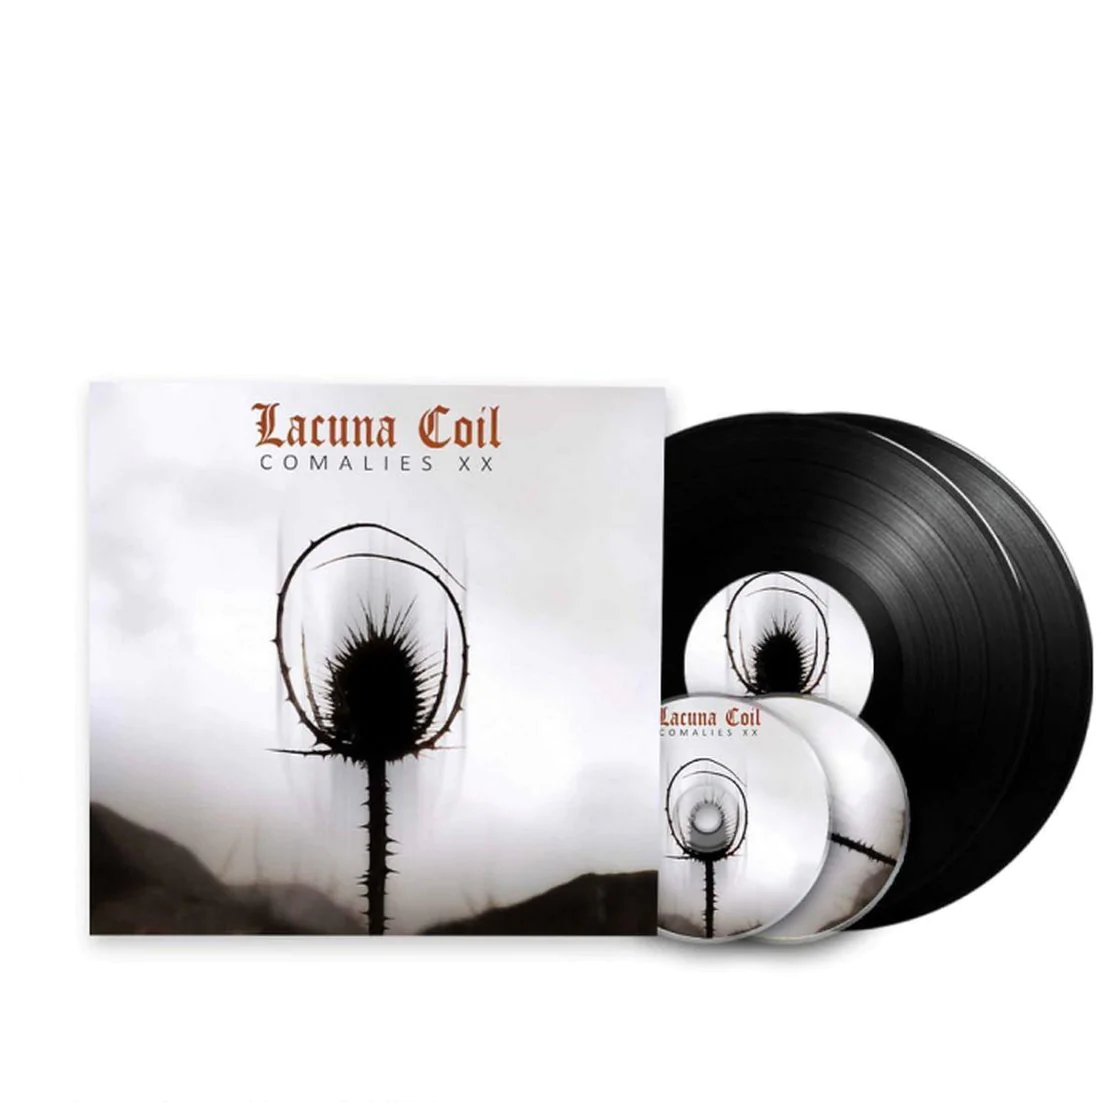 Lacuna Coil - Comalies XX (Limited Vinyl + 2 CD)